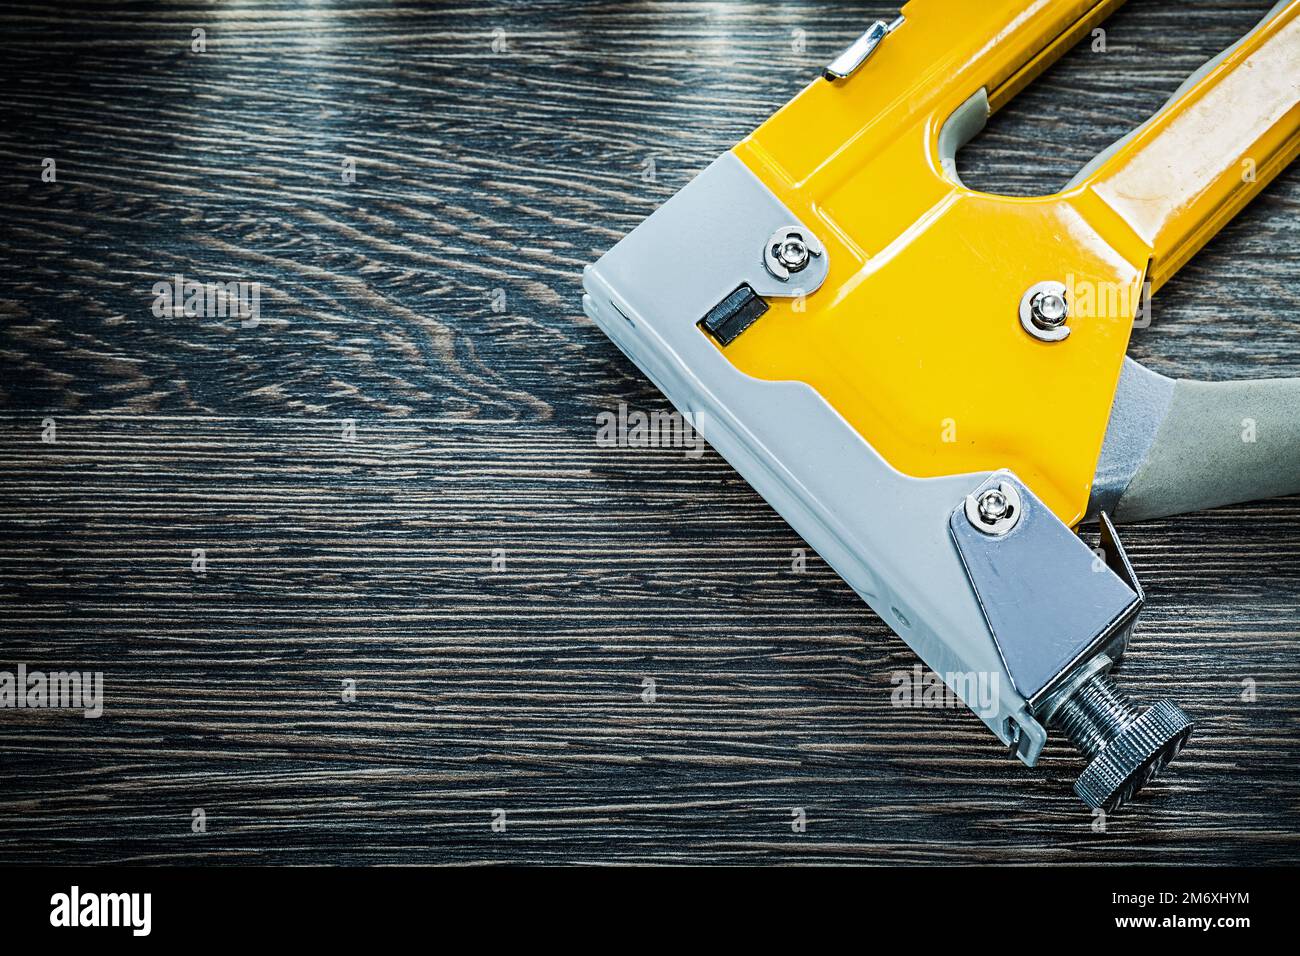 Construction stapler gun on wooden board. Stock Photo